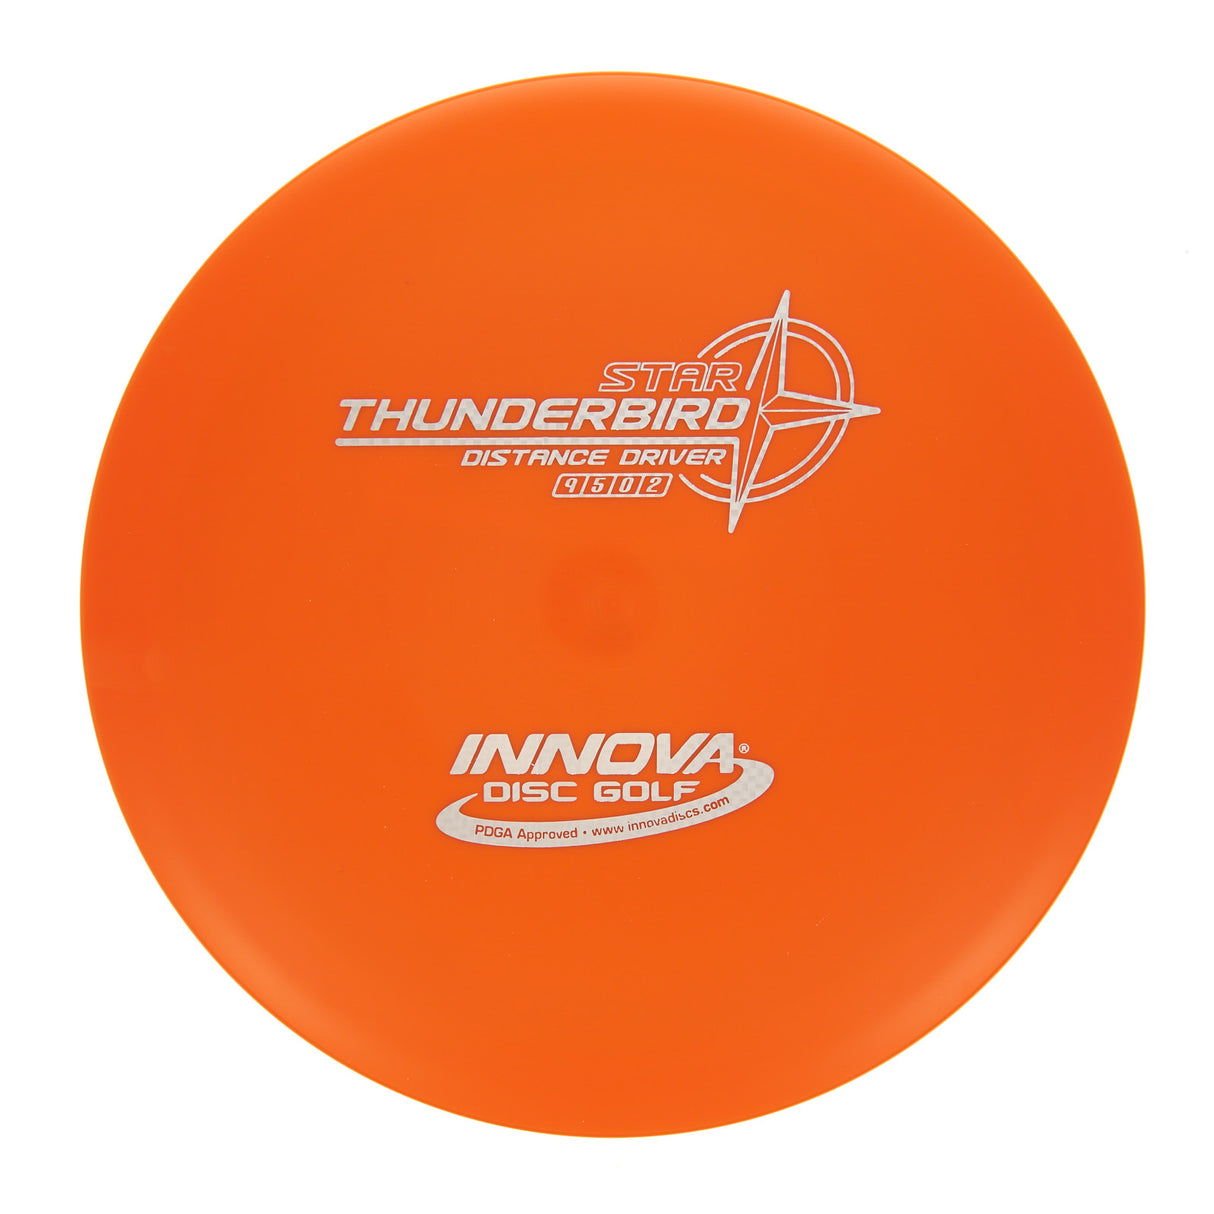 Innova Thunderbird - Star 169g | Style 0002